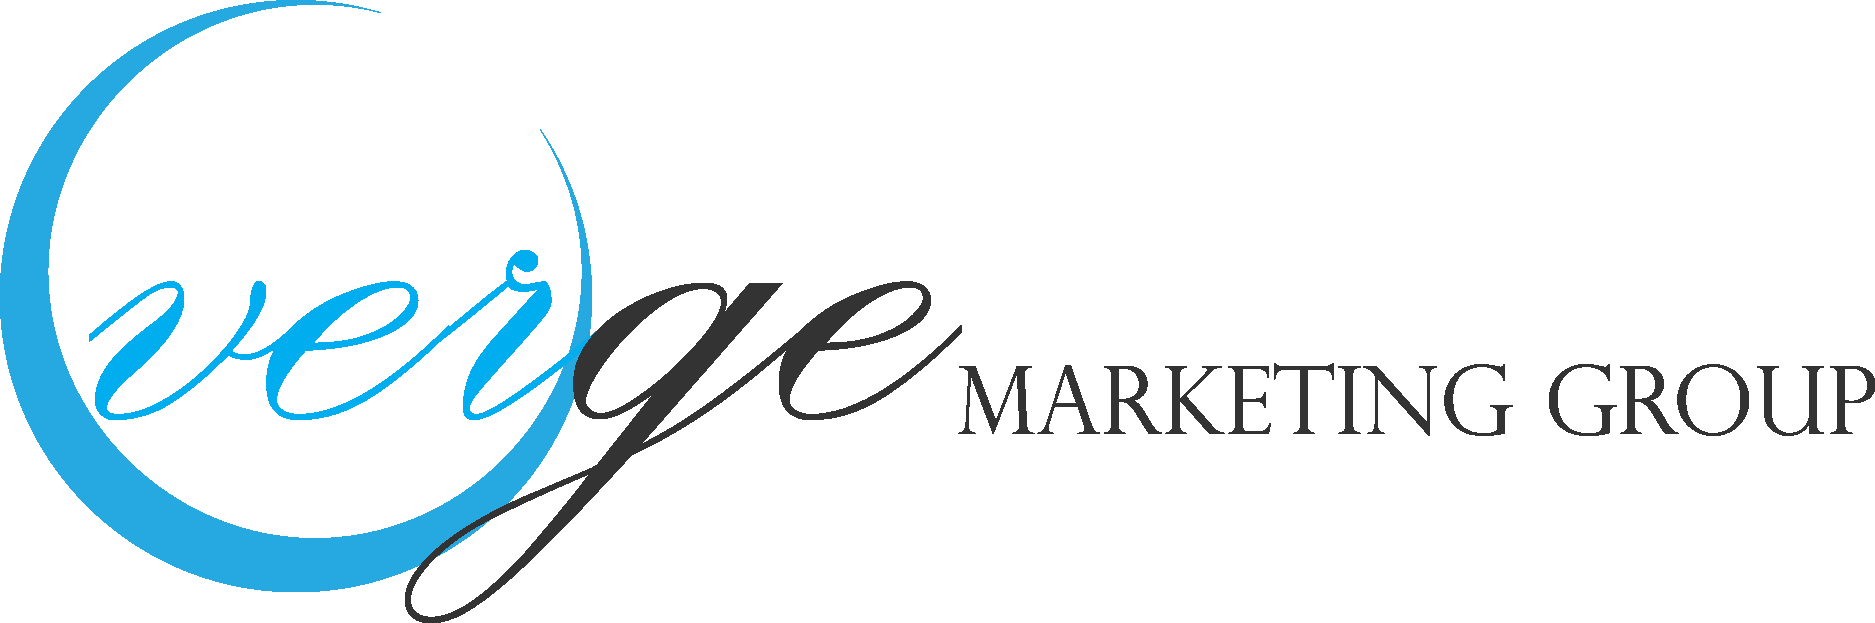 Verge Marketing Group Logo Vector